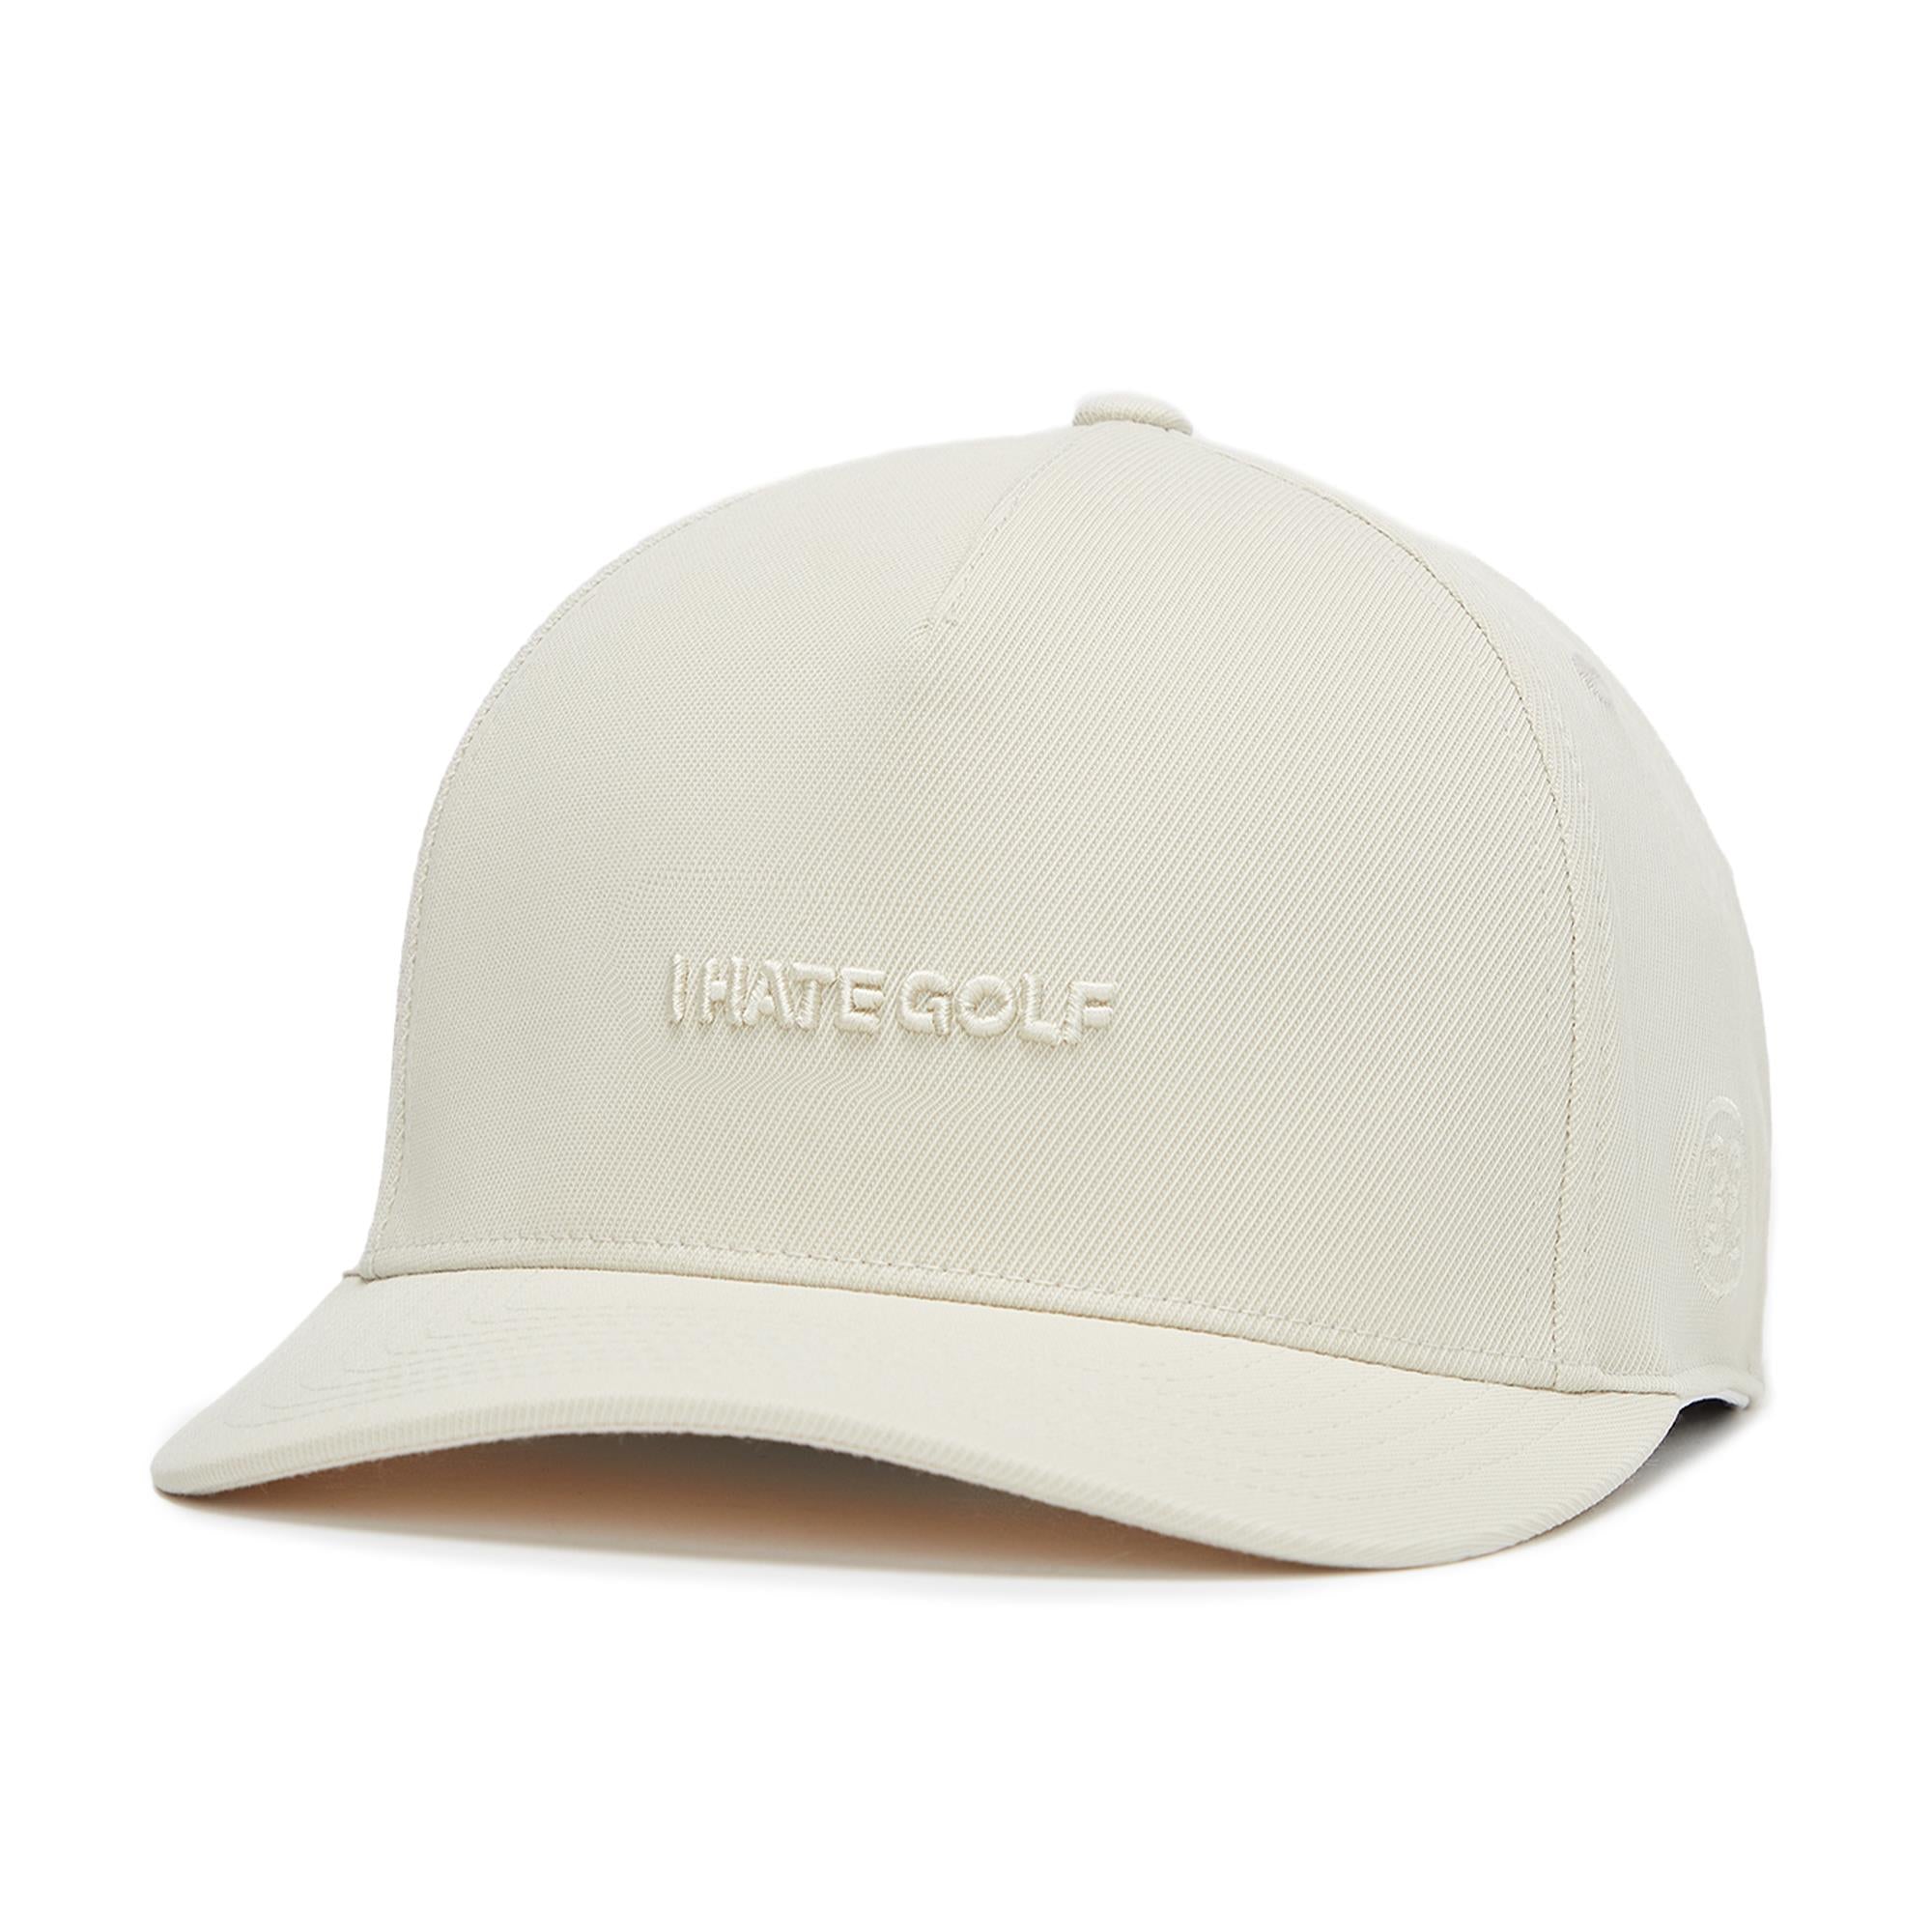 Barstool Golf Flower Crossed Tees Performance Hat | Fore Play Green